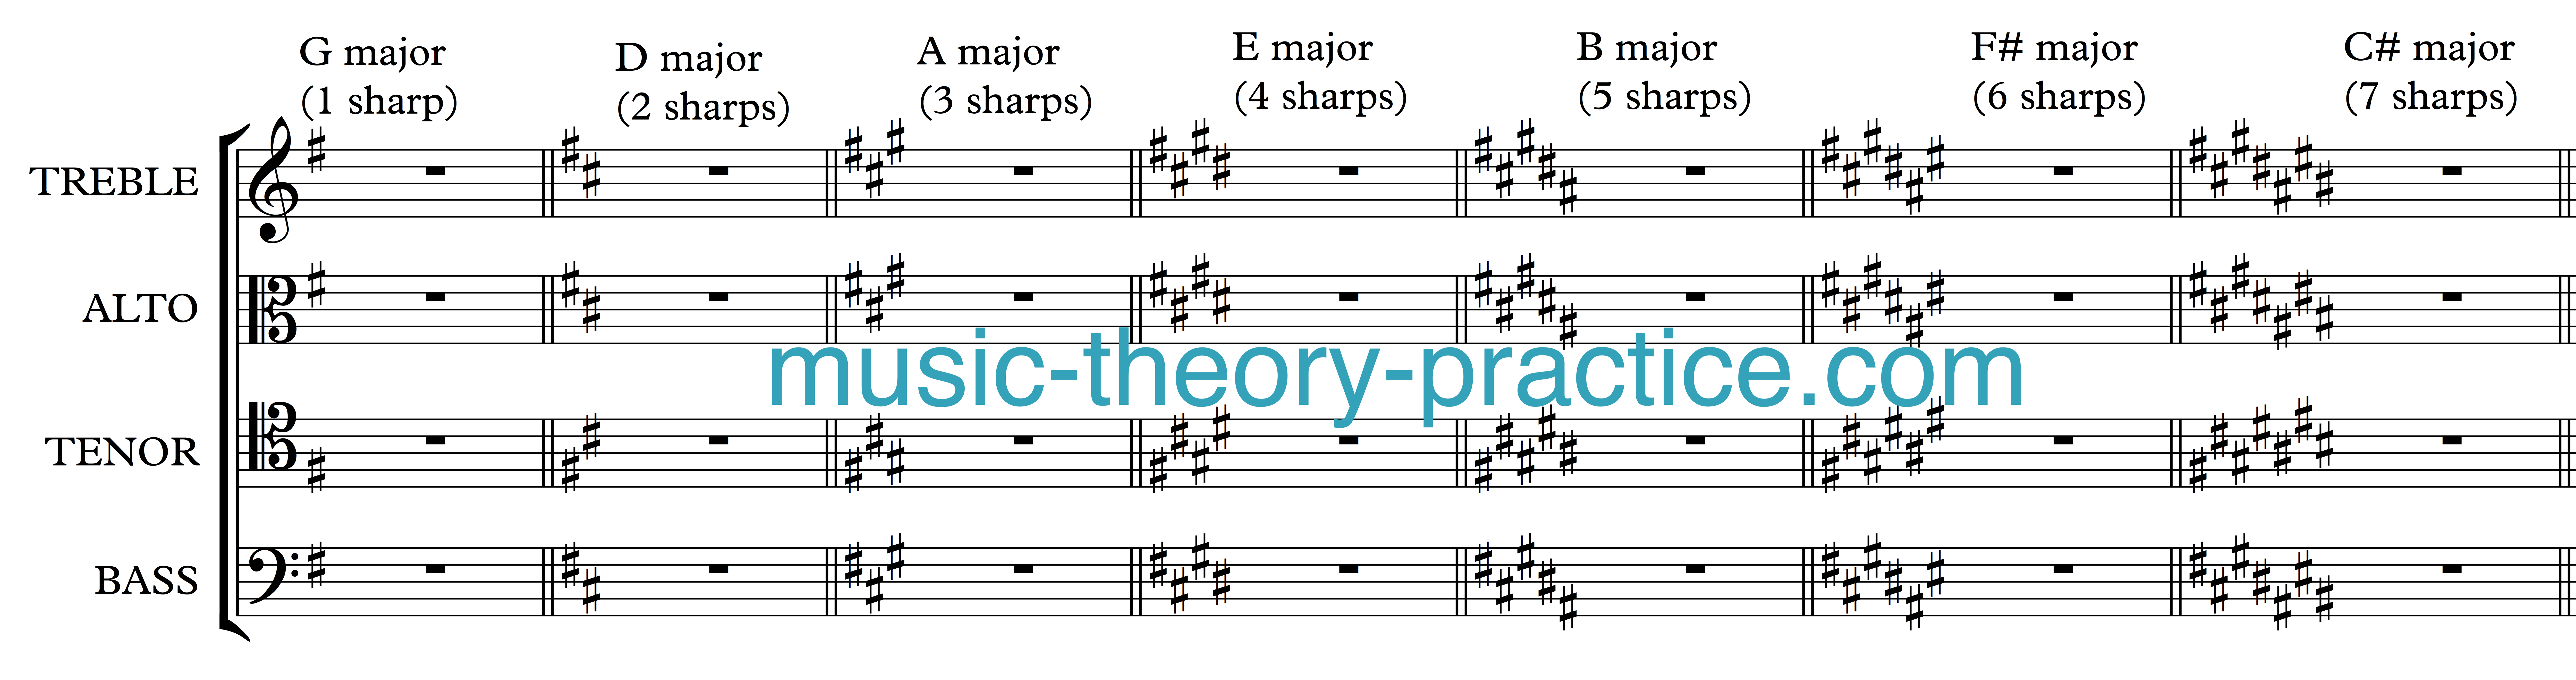 key-signature-flashcards-music-theory-practice